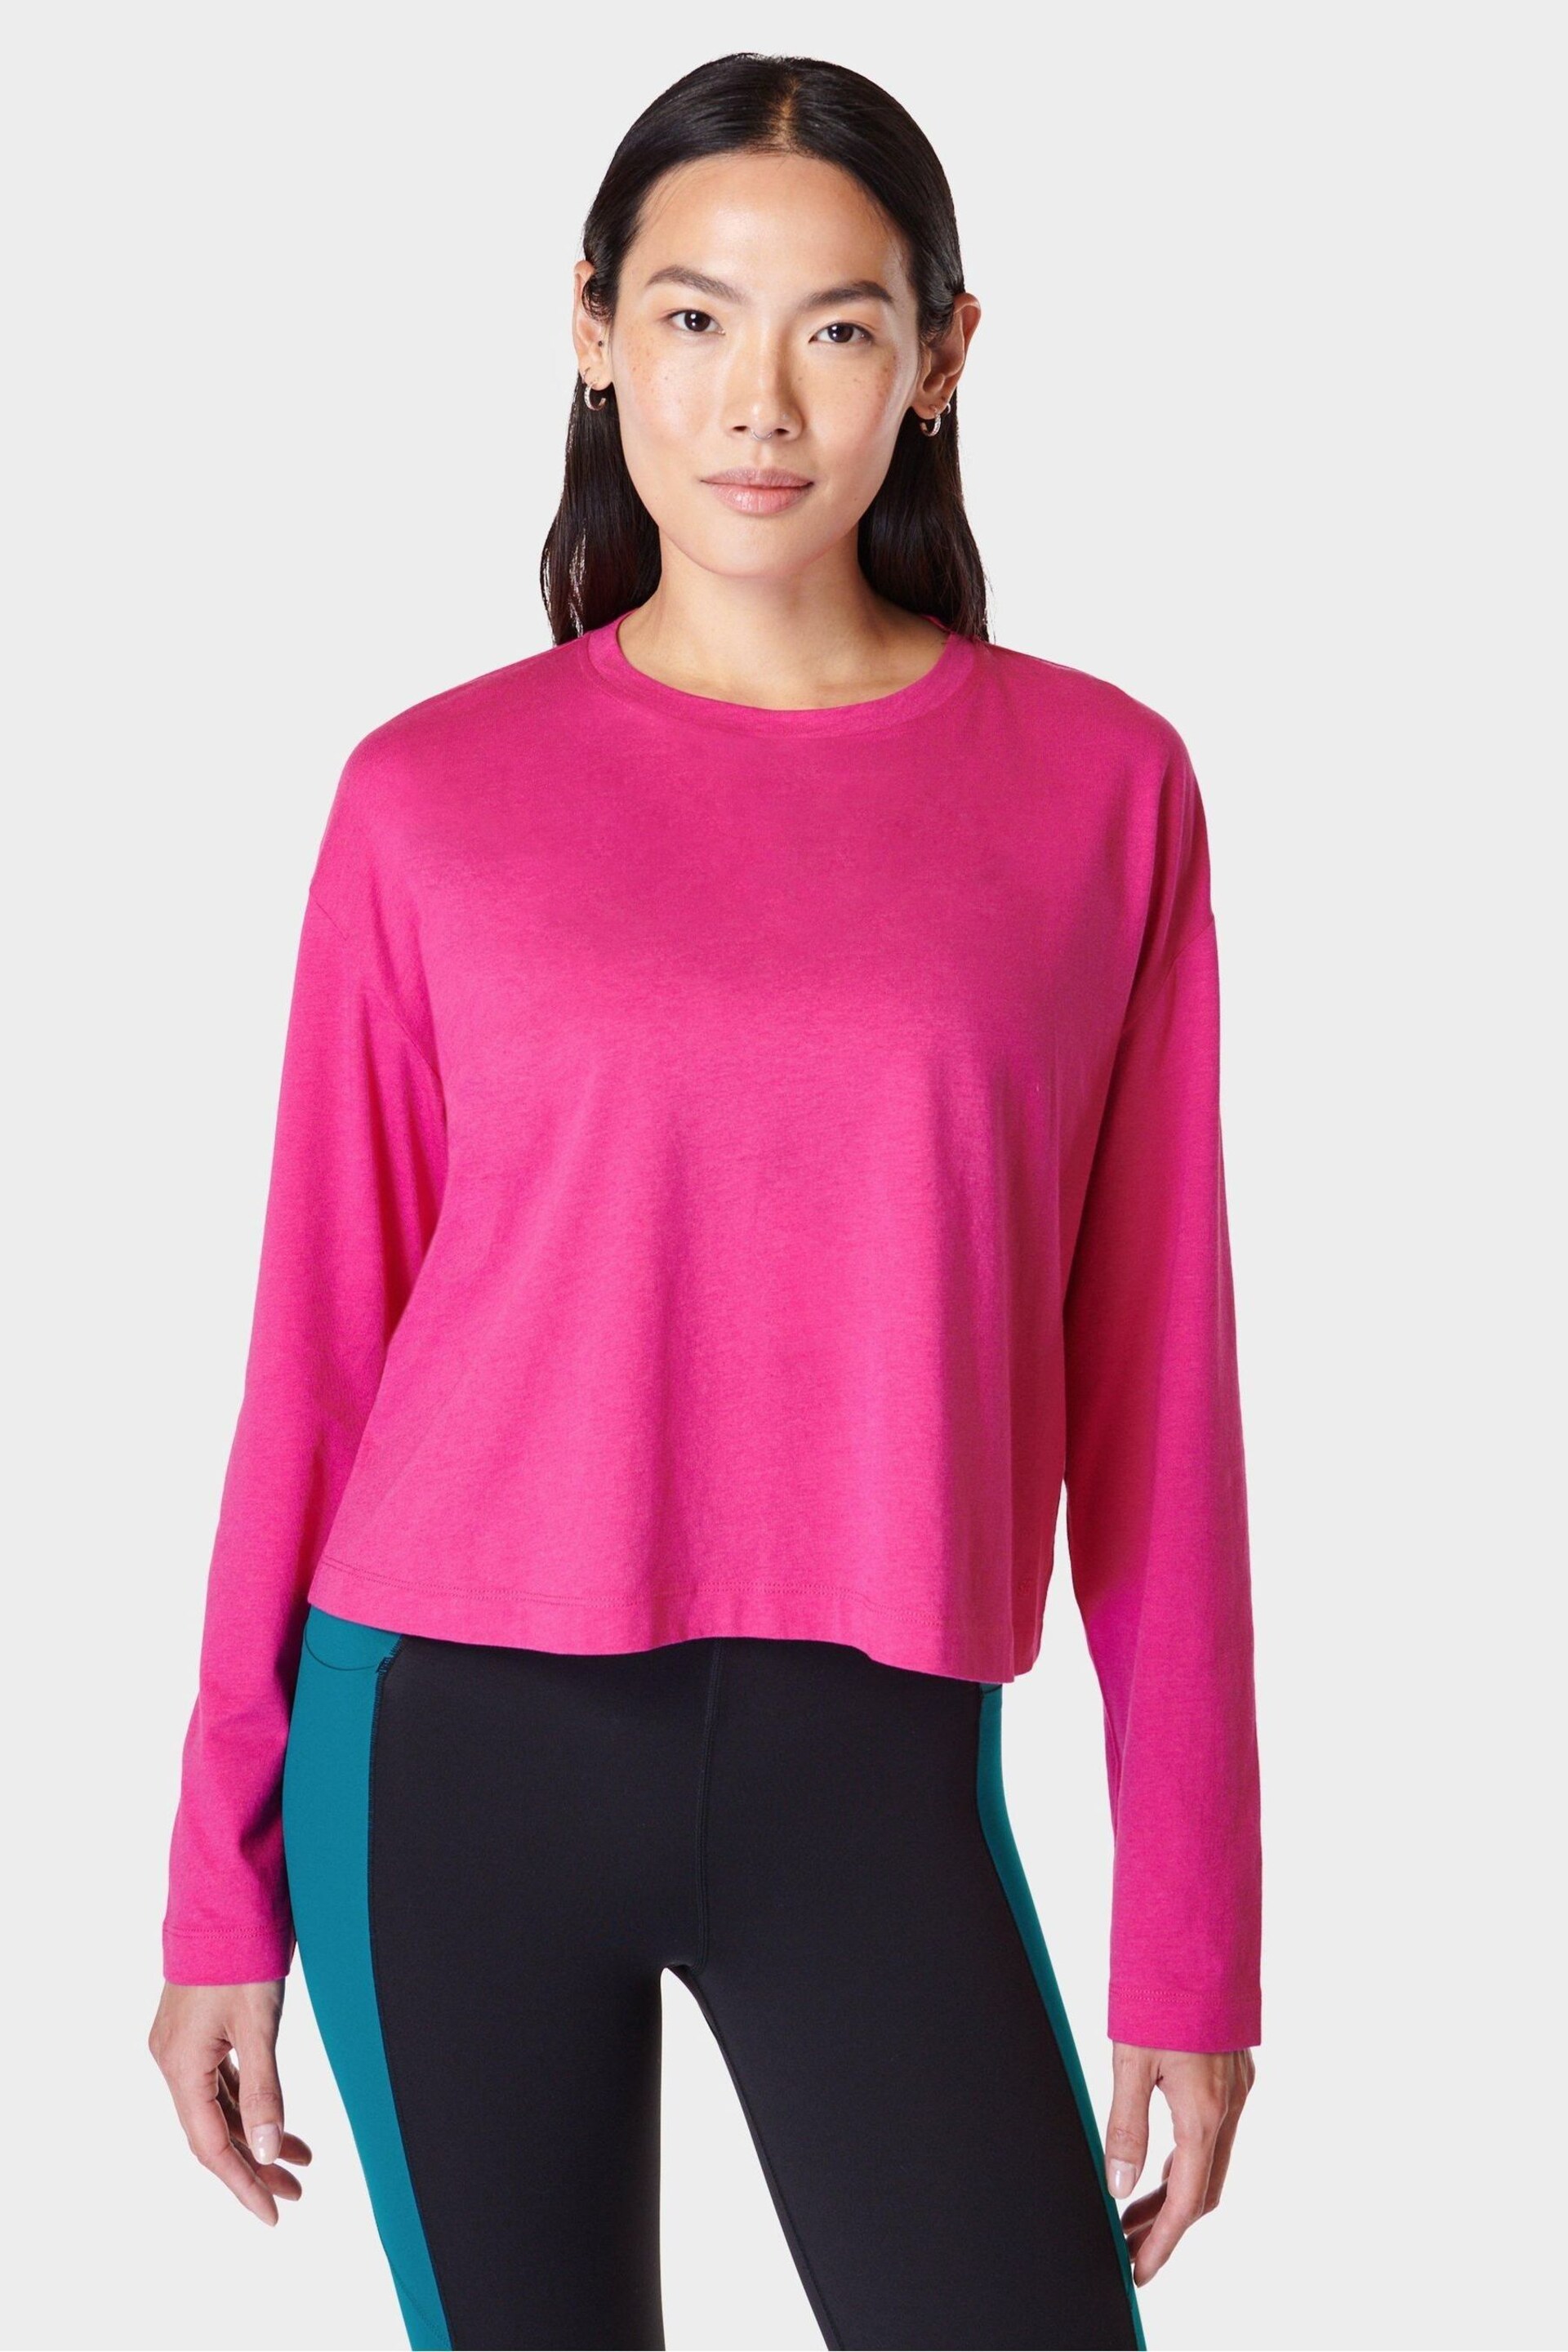 Sweaty Betty Beet Pink Essential Crop Long Sleeve T-Shirt - Image 1 of 7